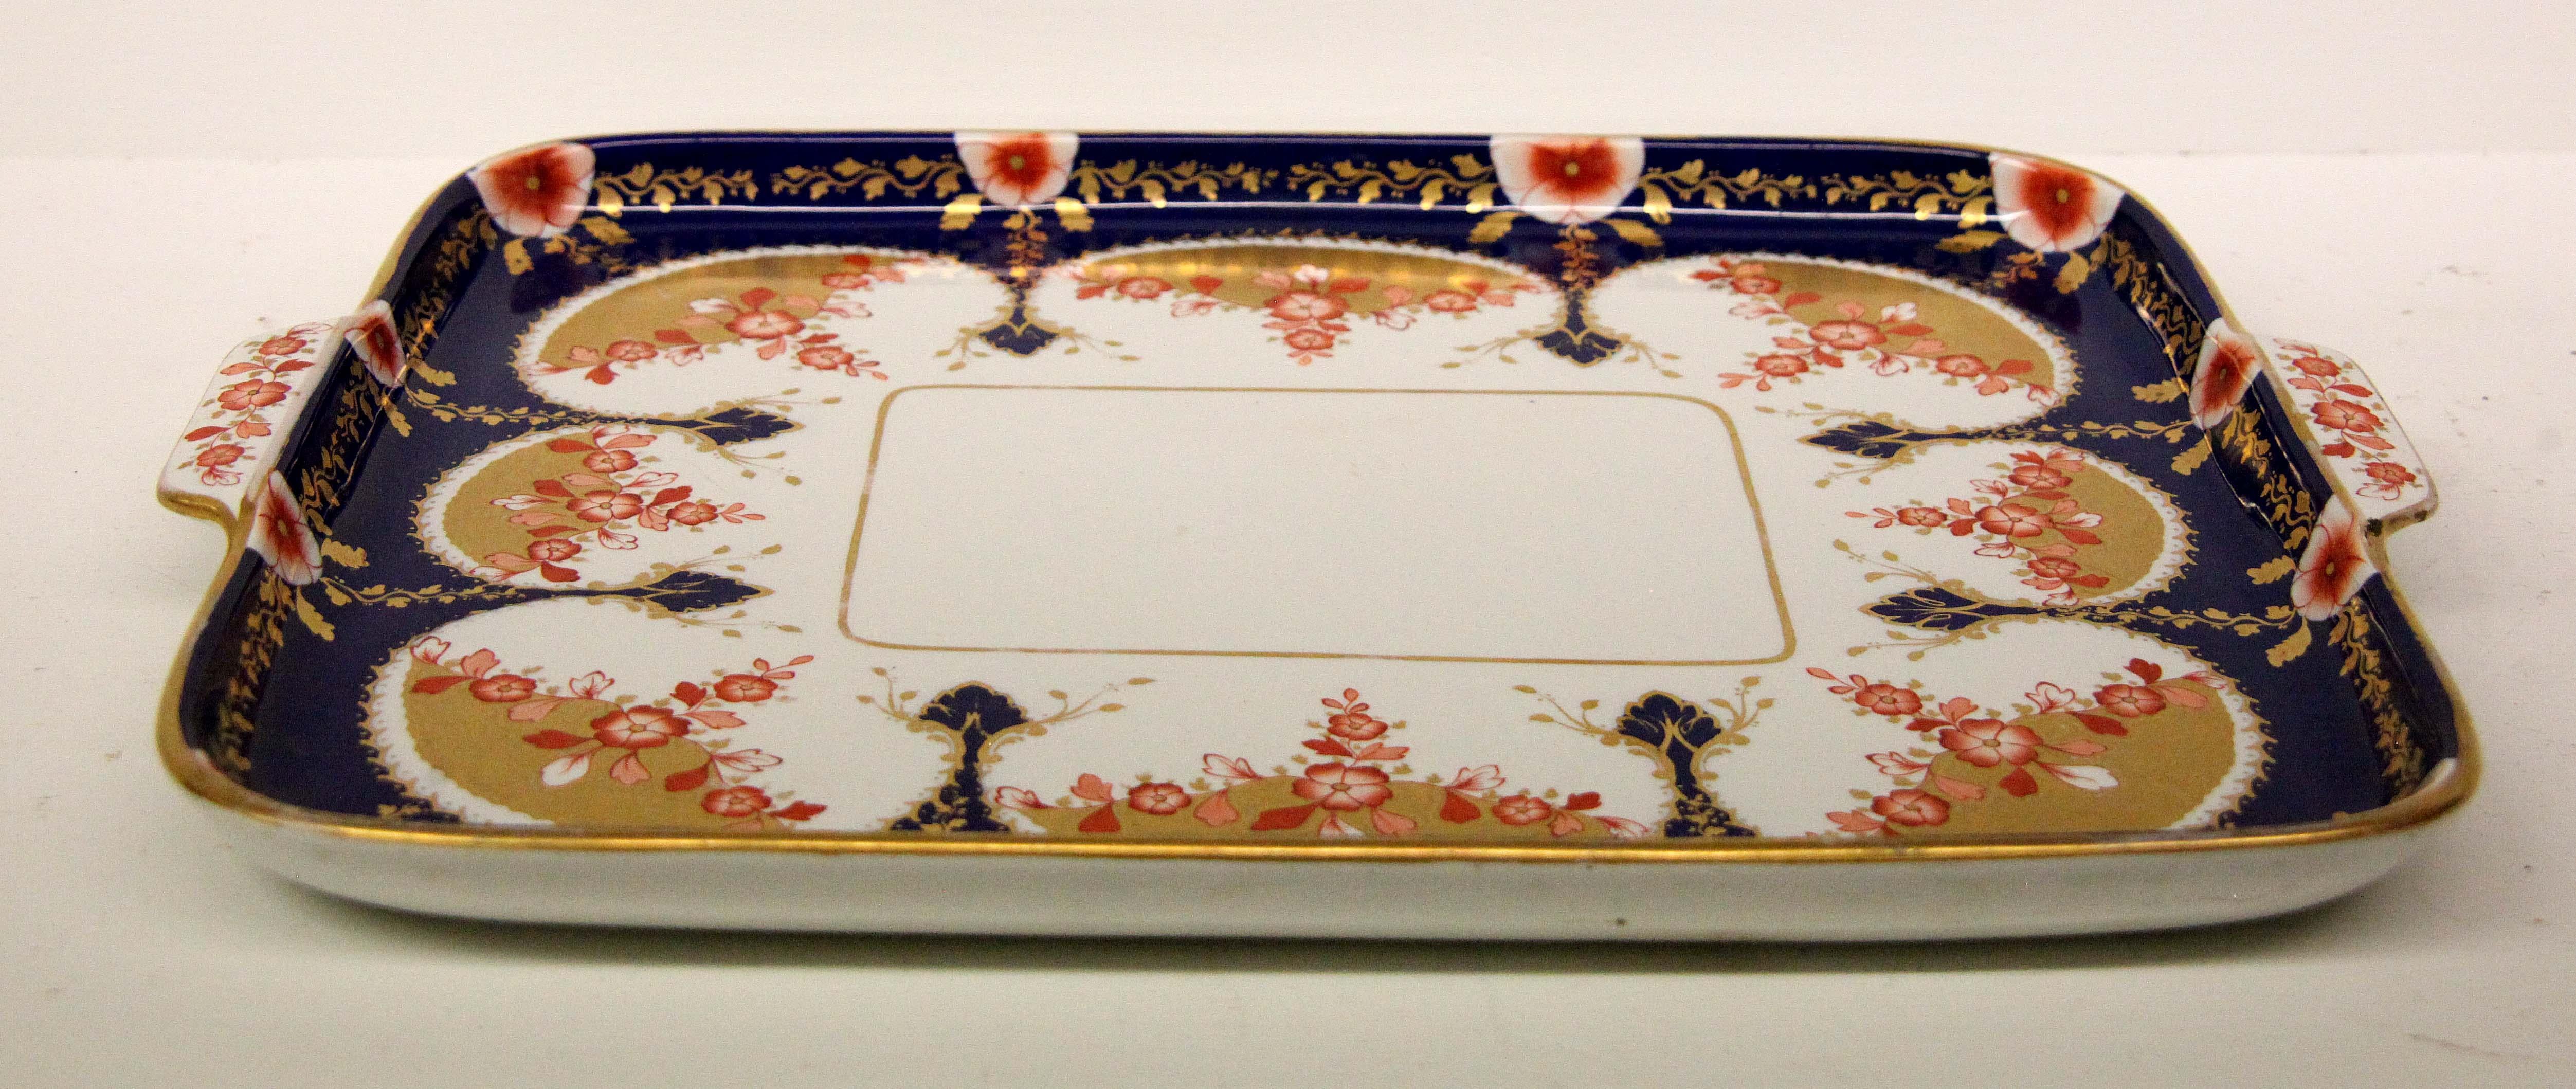 19th Century English Copeland Porcelain Serving Tray 3